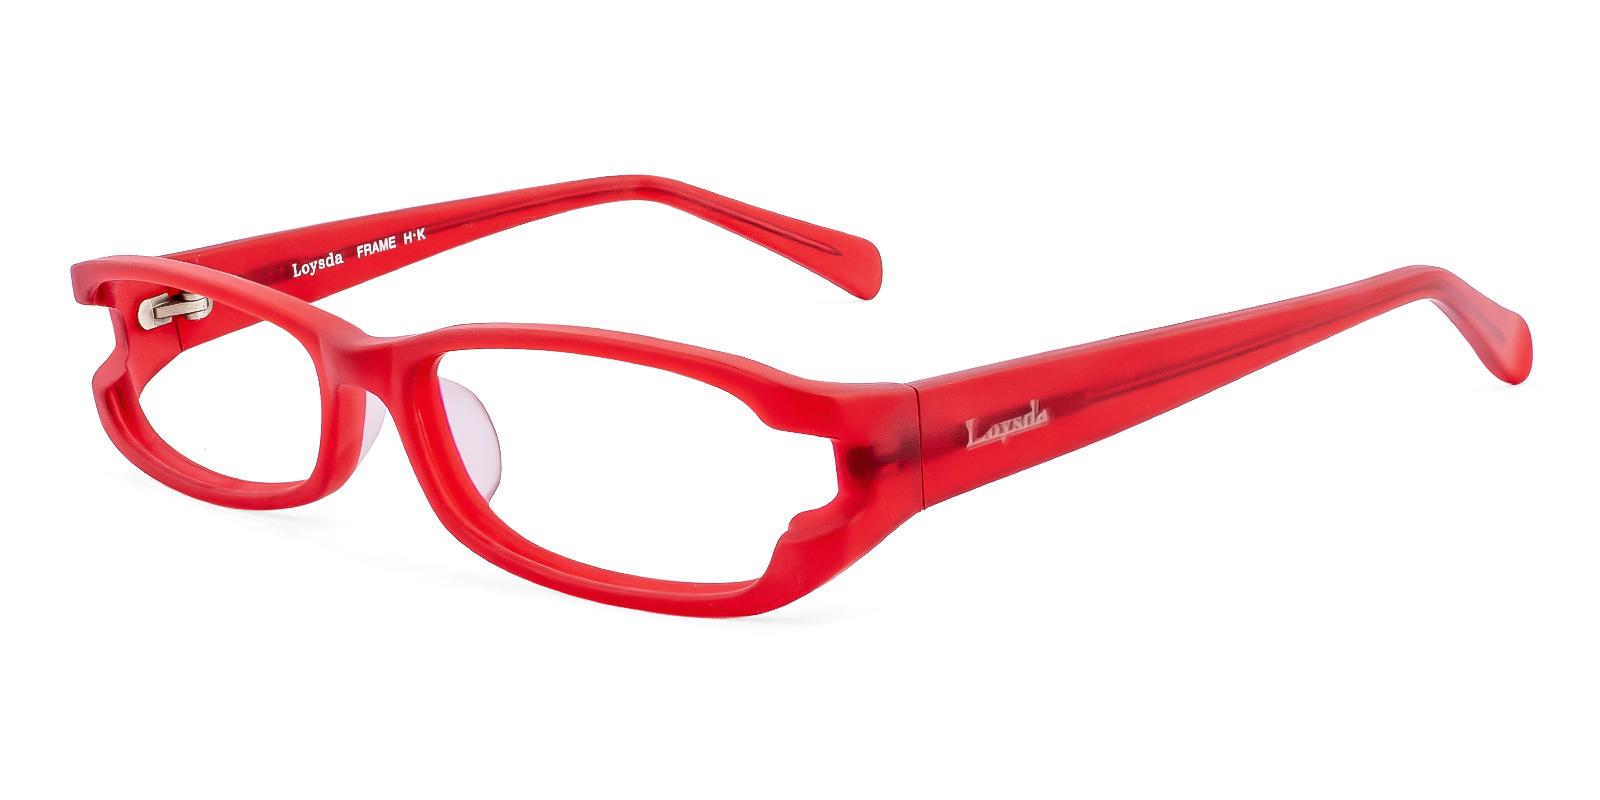 Otherture Red Acetate Eyeglasses , UniversalBridgeFit Frames from ABBE Glasses